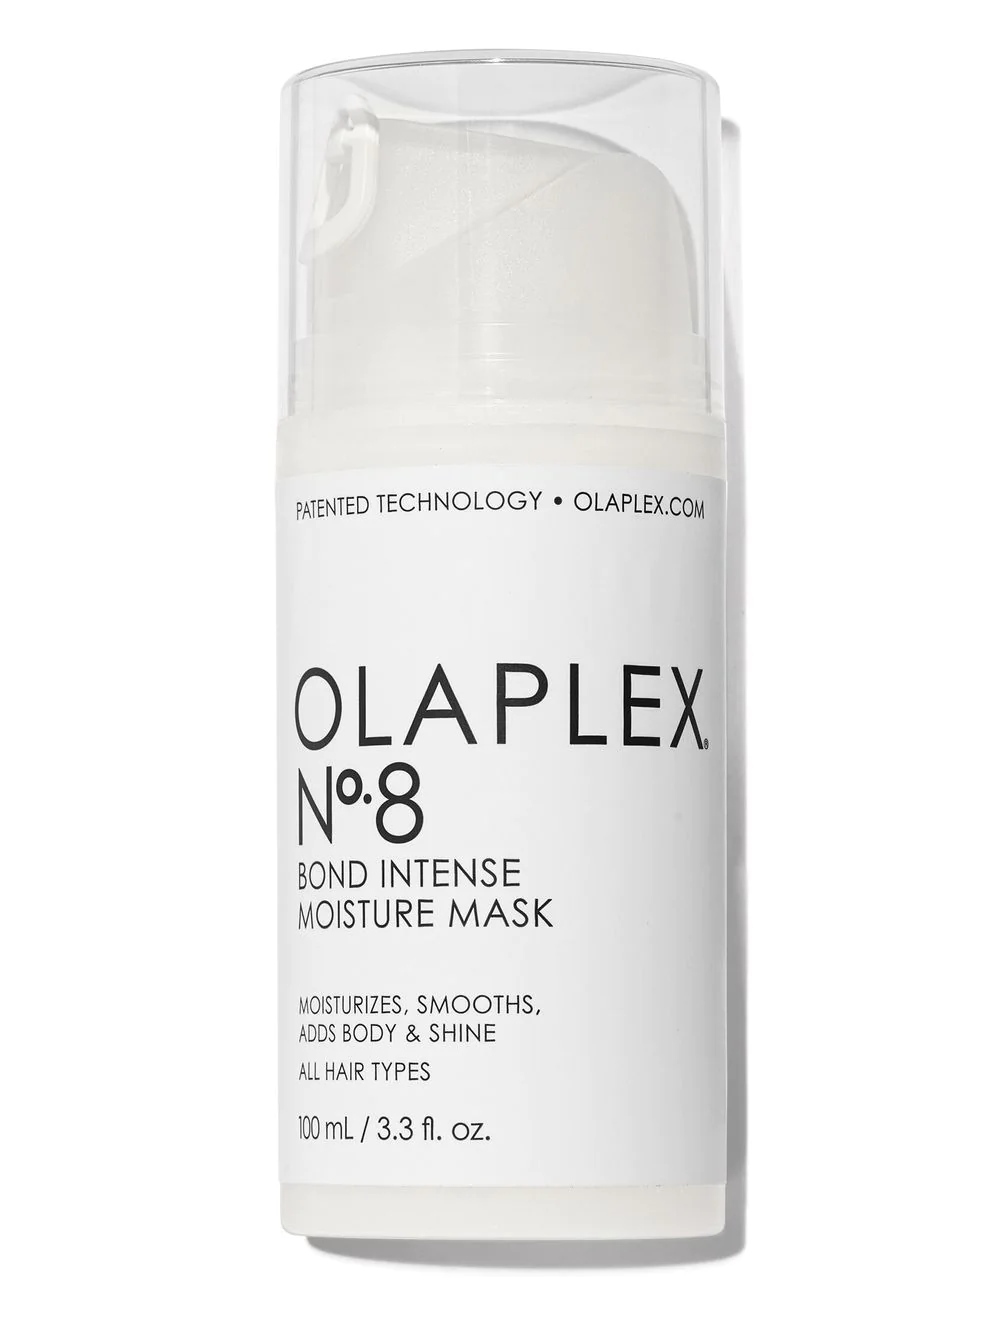 Olaplex
Nº.8 Bond Intense Moisture Mask